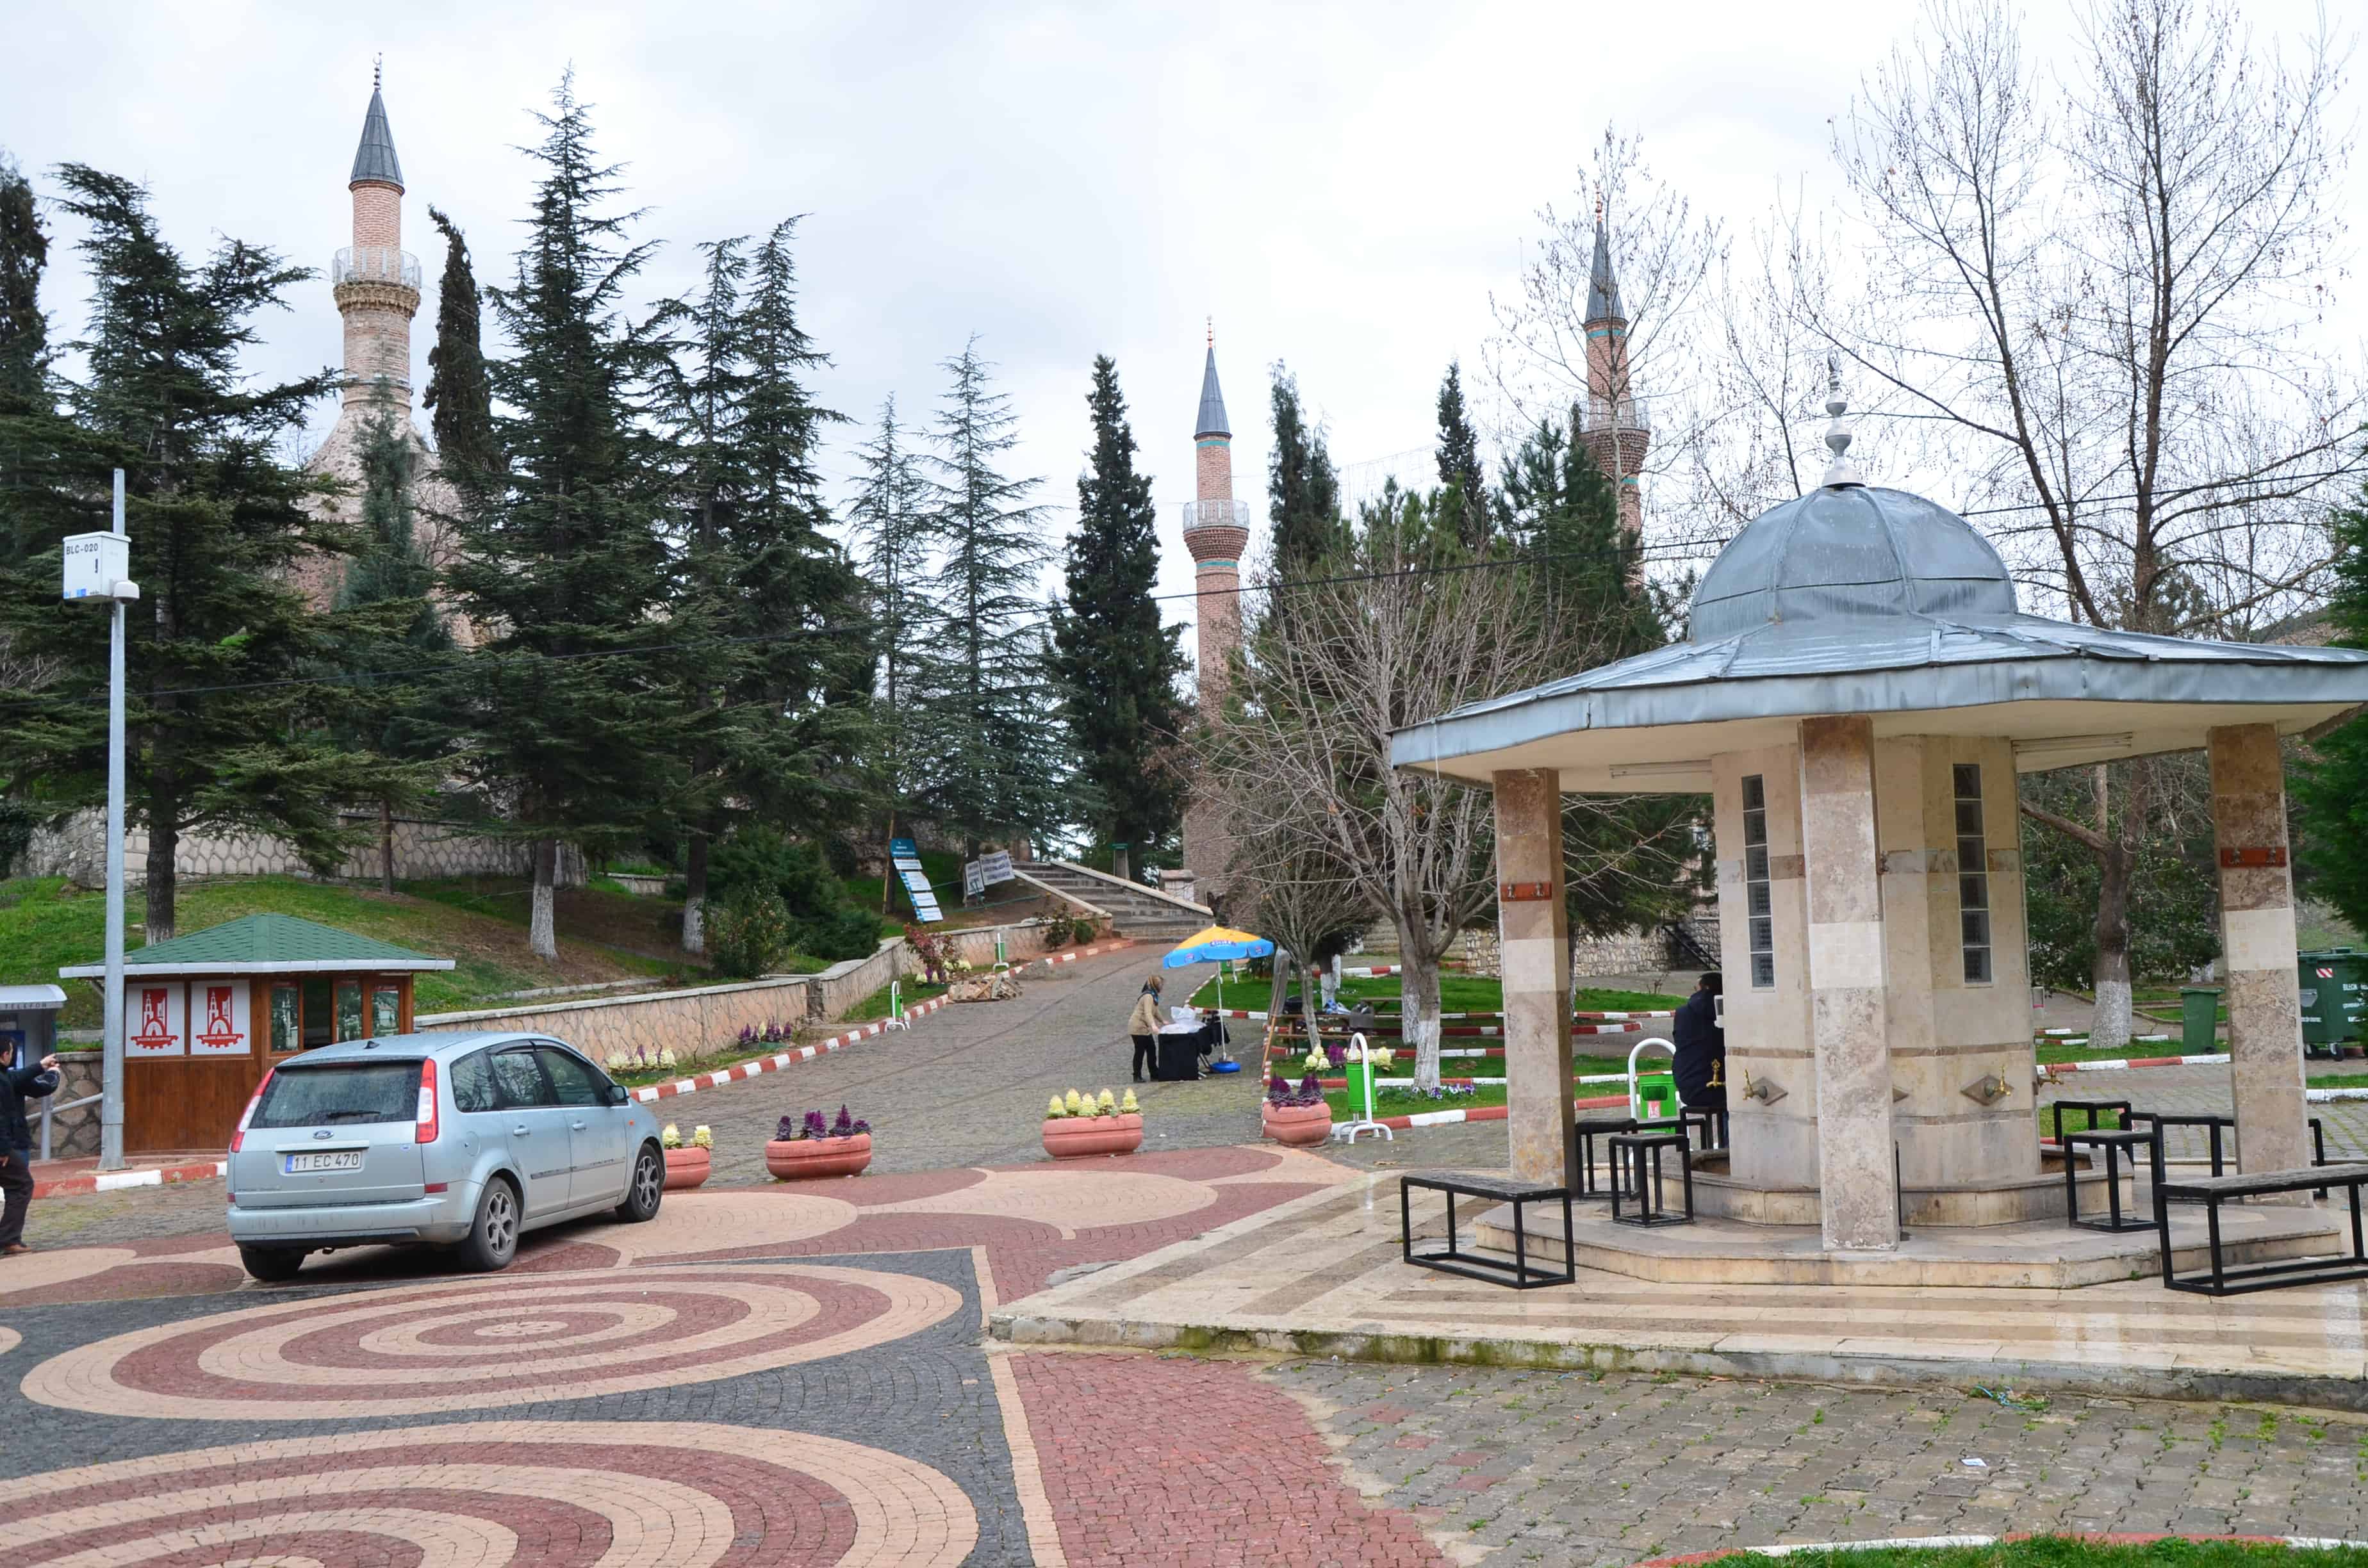 Sheikh Edebali Lodge in Bilecik, Turkey